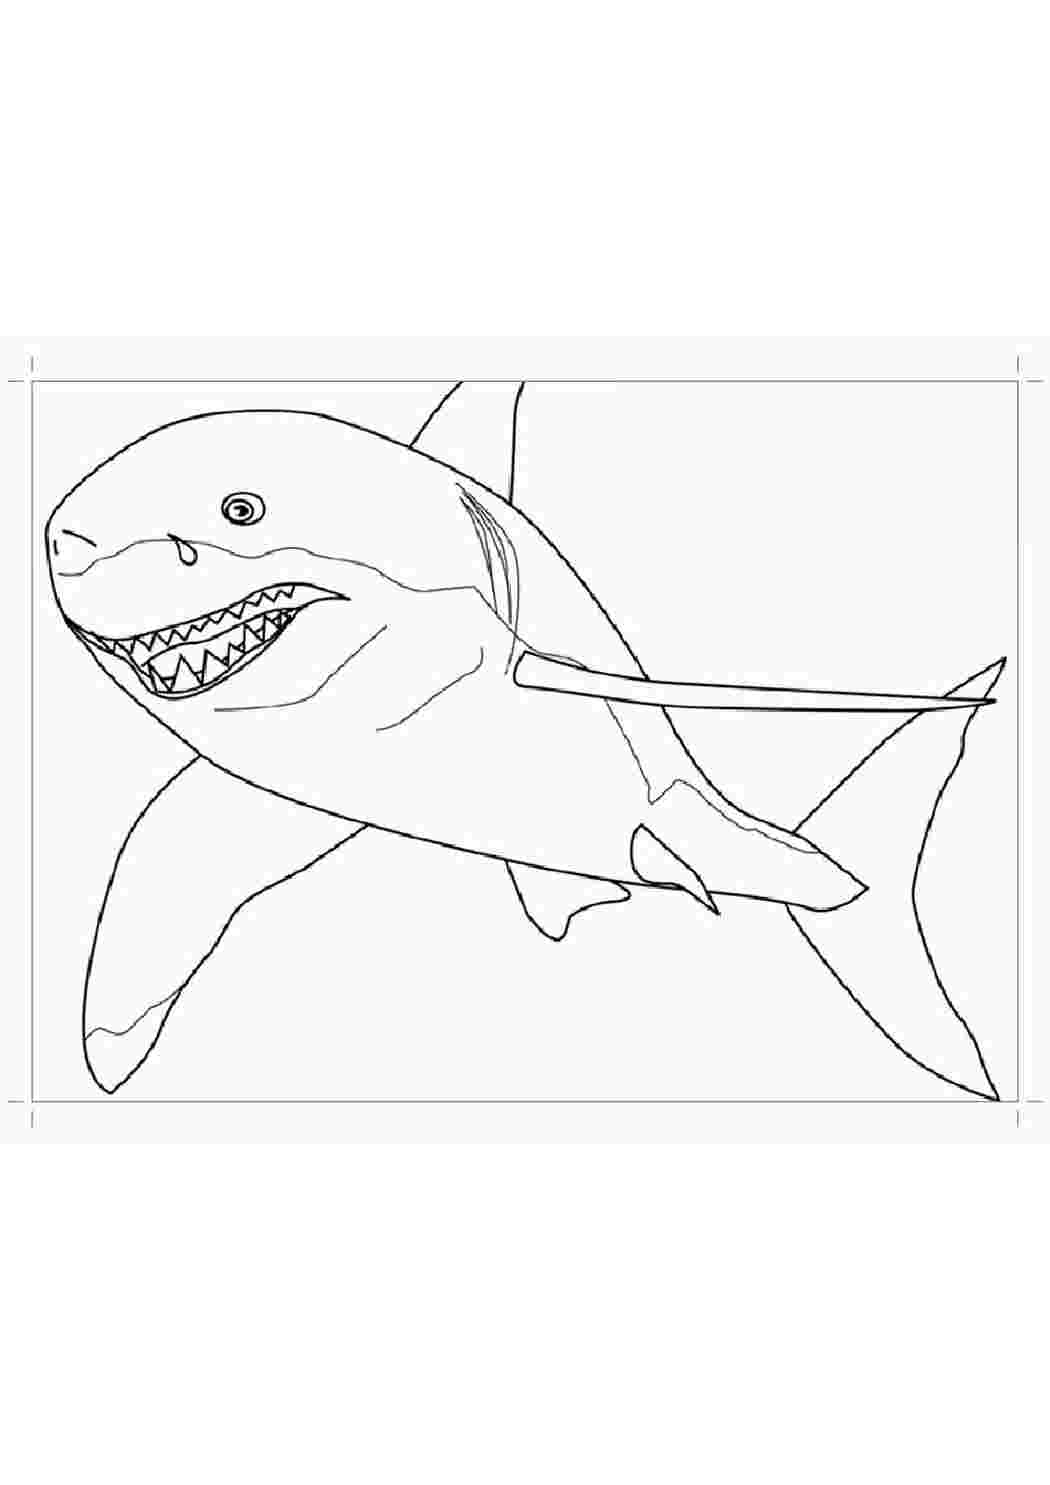 Раскраски Акулы. +50 раскрасок с акулами